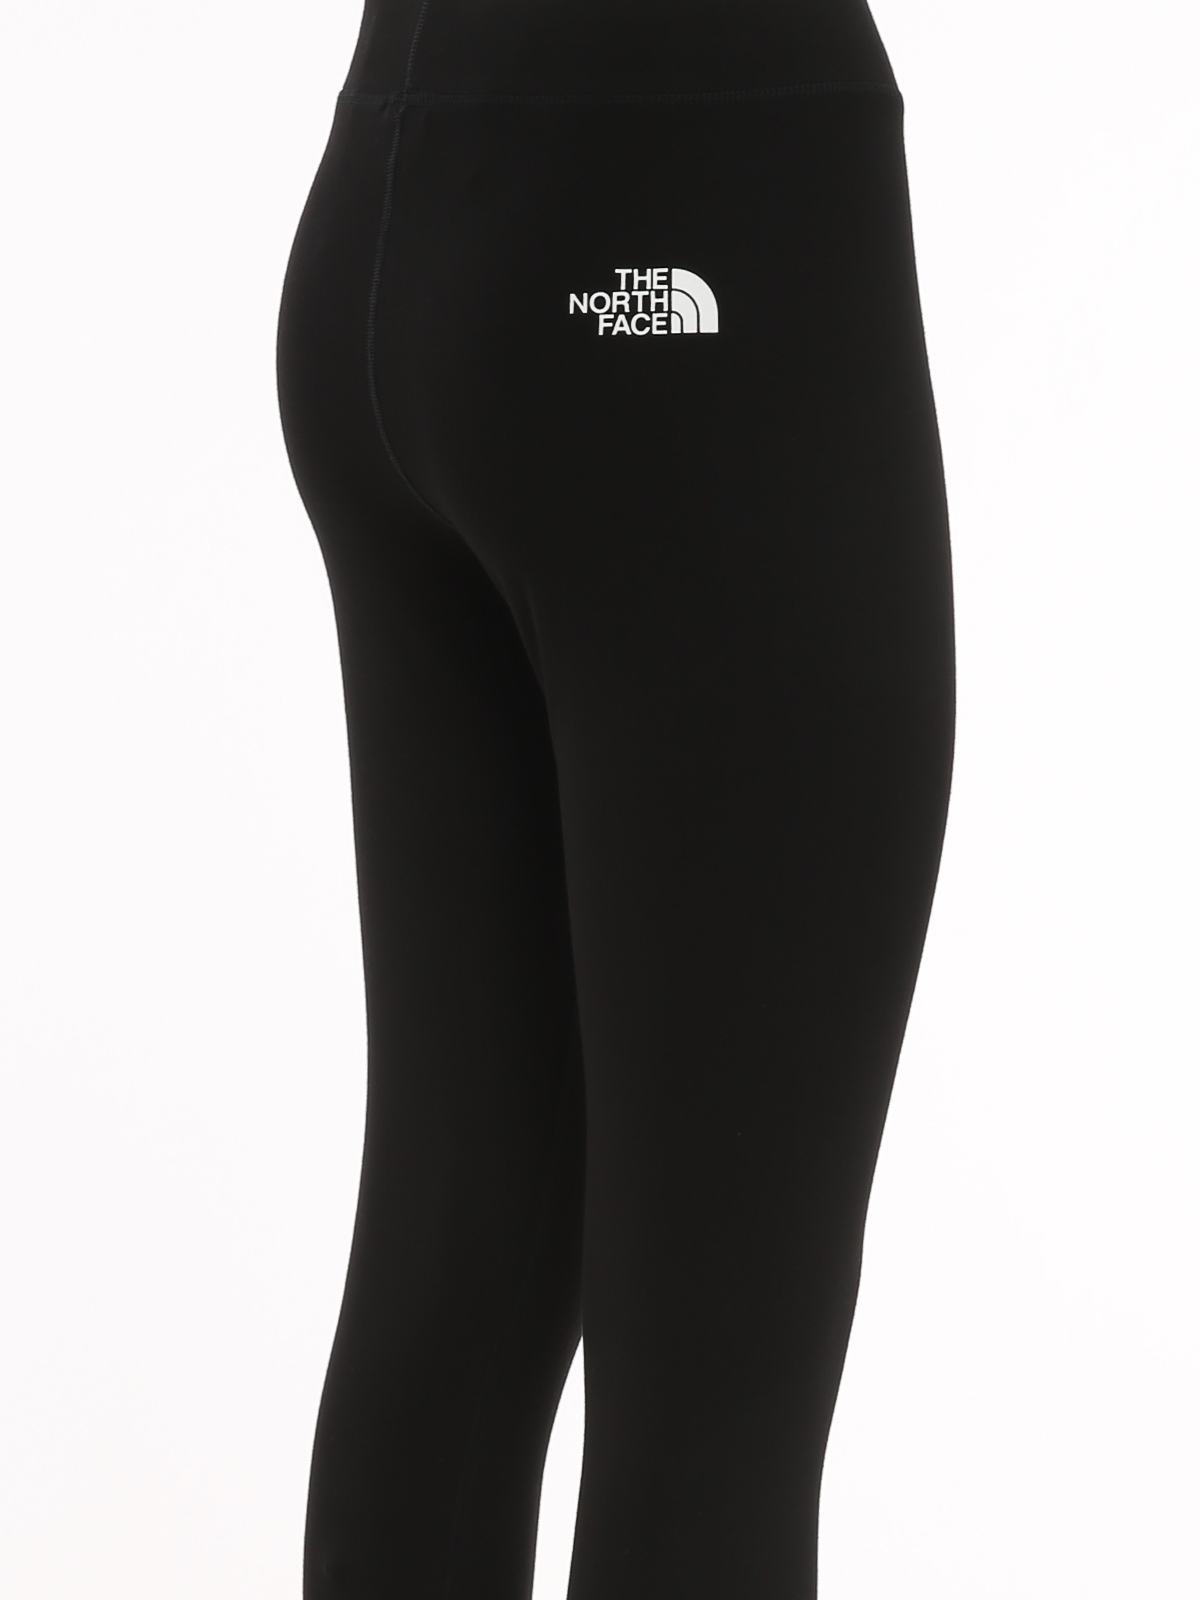 The North Face Women's Logo Print Leggings in Black